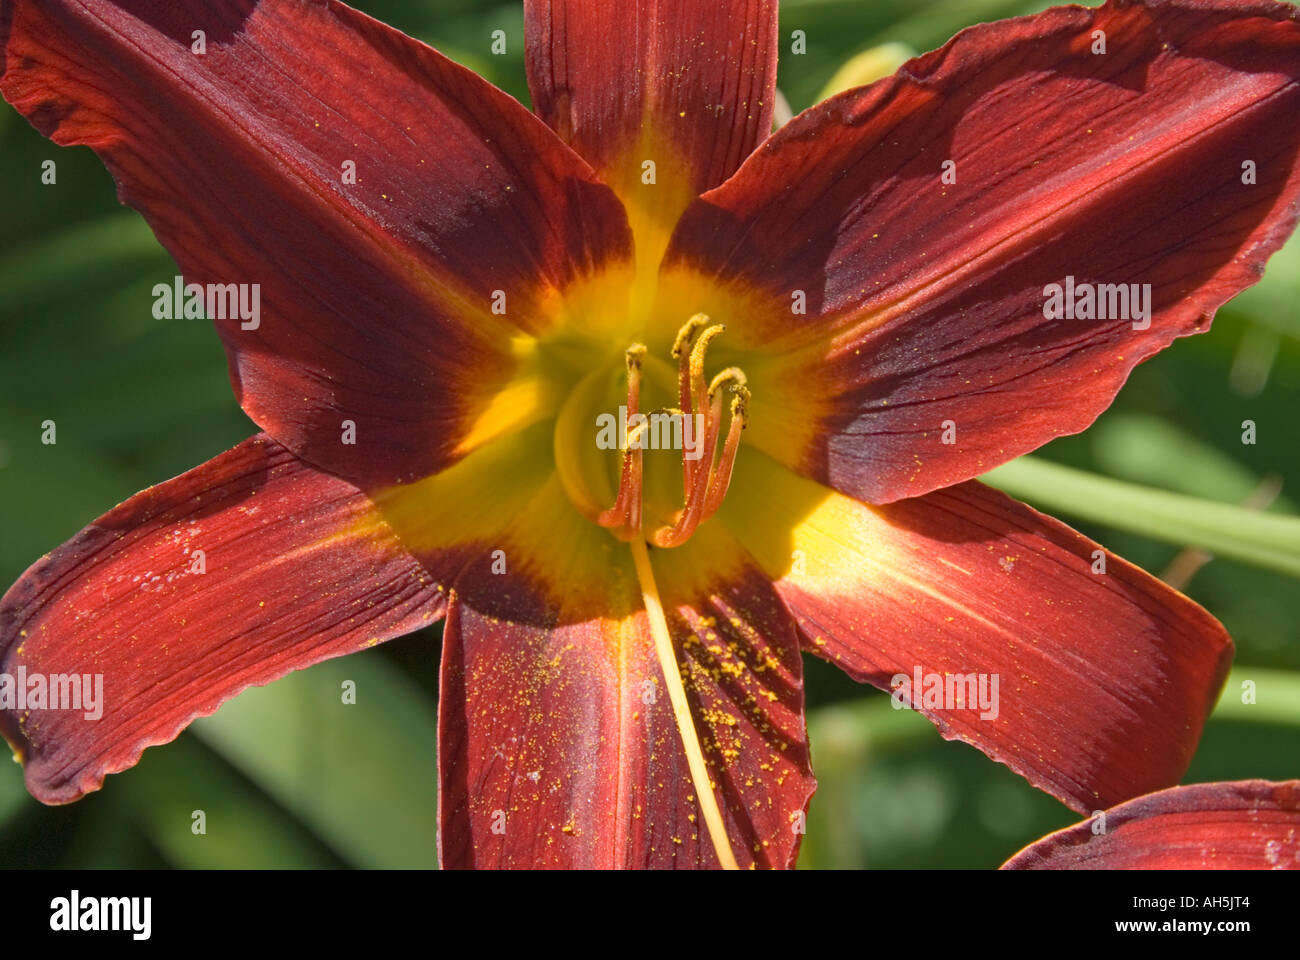 Hemerocallis daylily Stafford in a garden setting Stock Photo